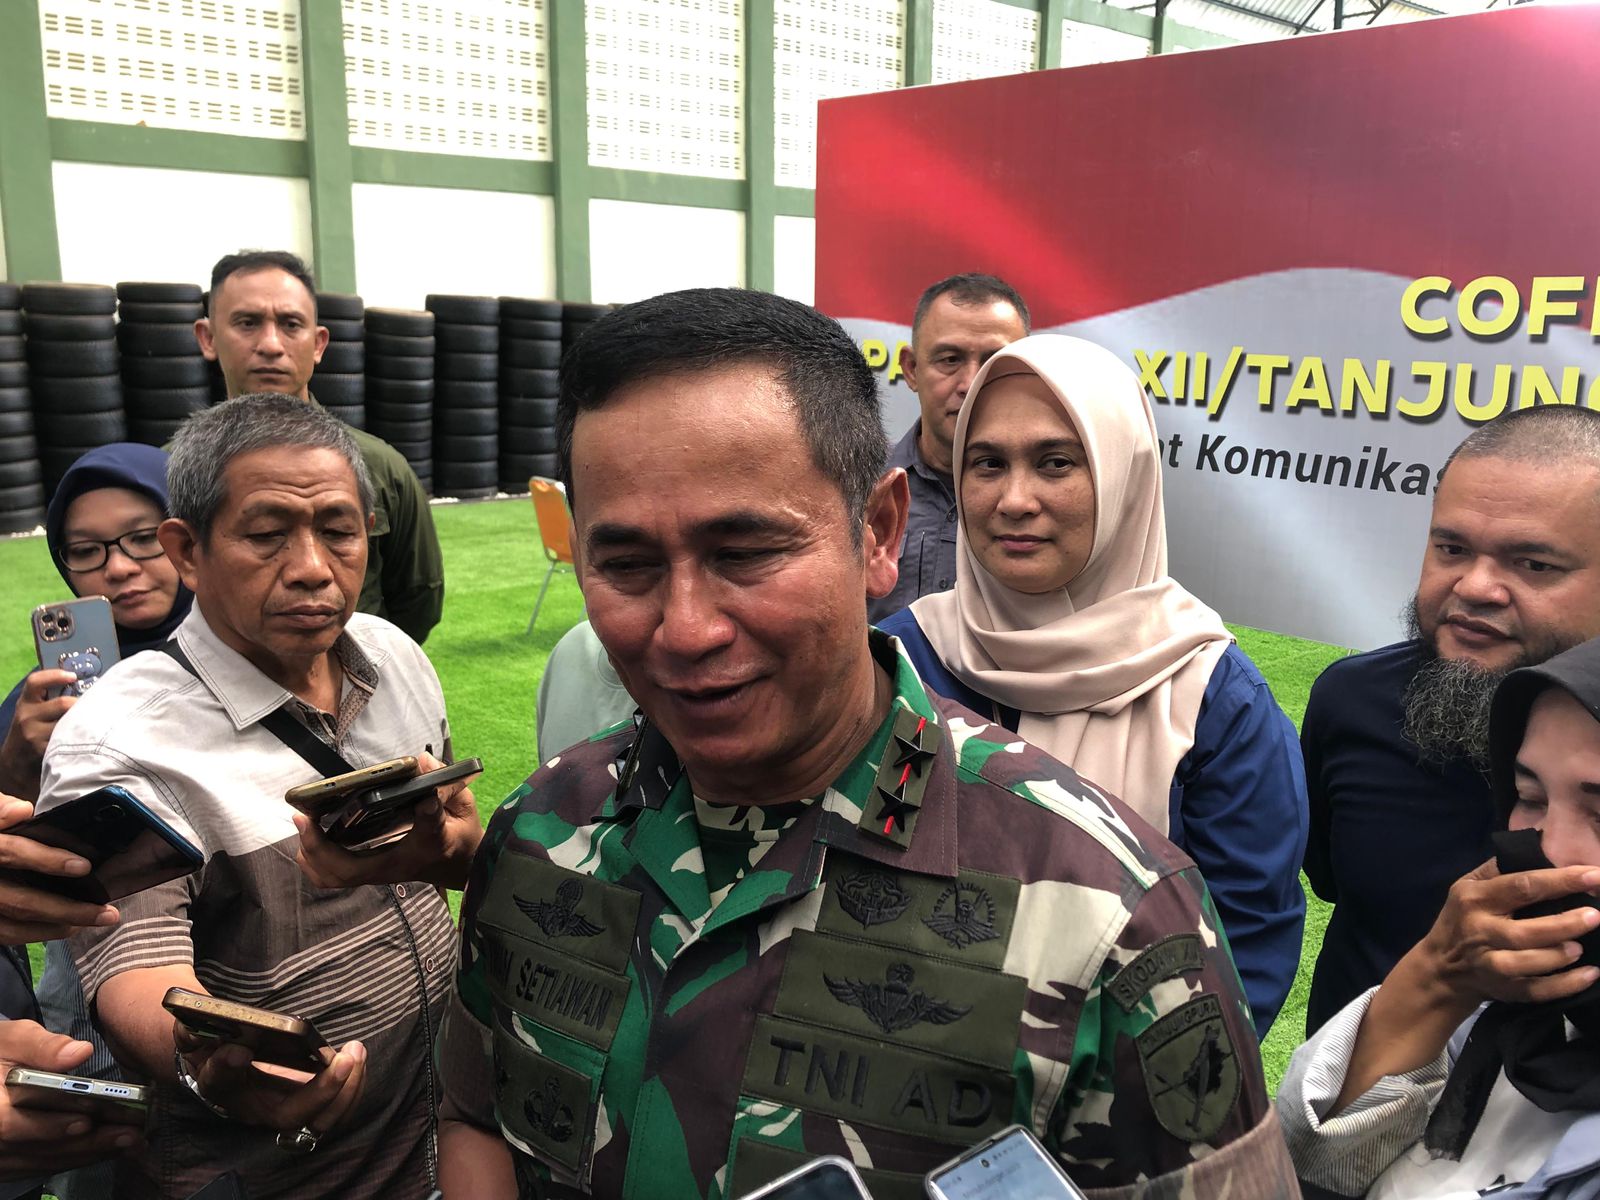 Pangdam XII/Tanjungpura, Mayjen TNI Iwan Setiawan. (Foto: Indri)